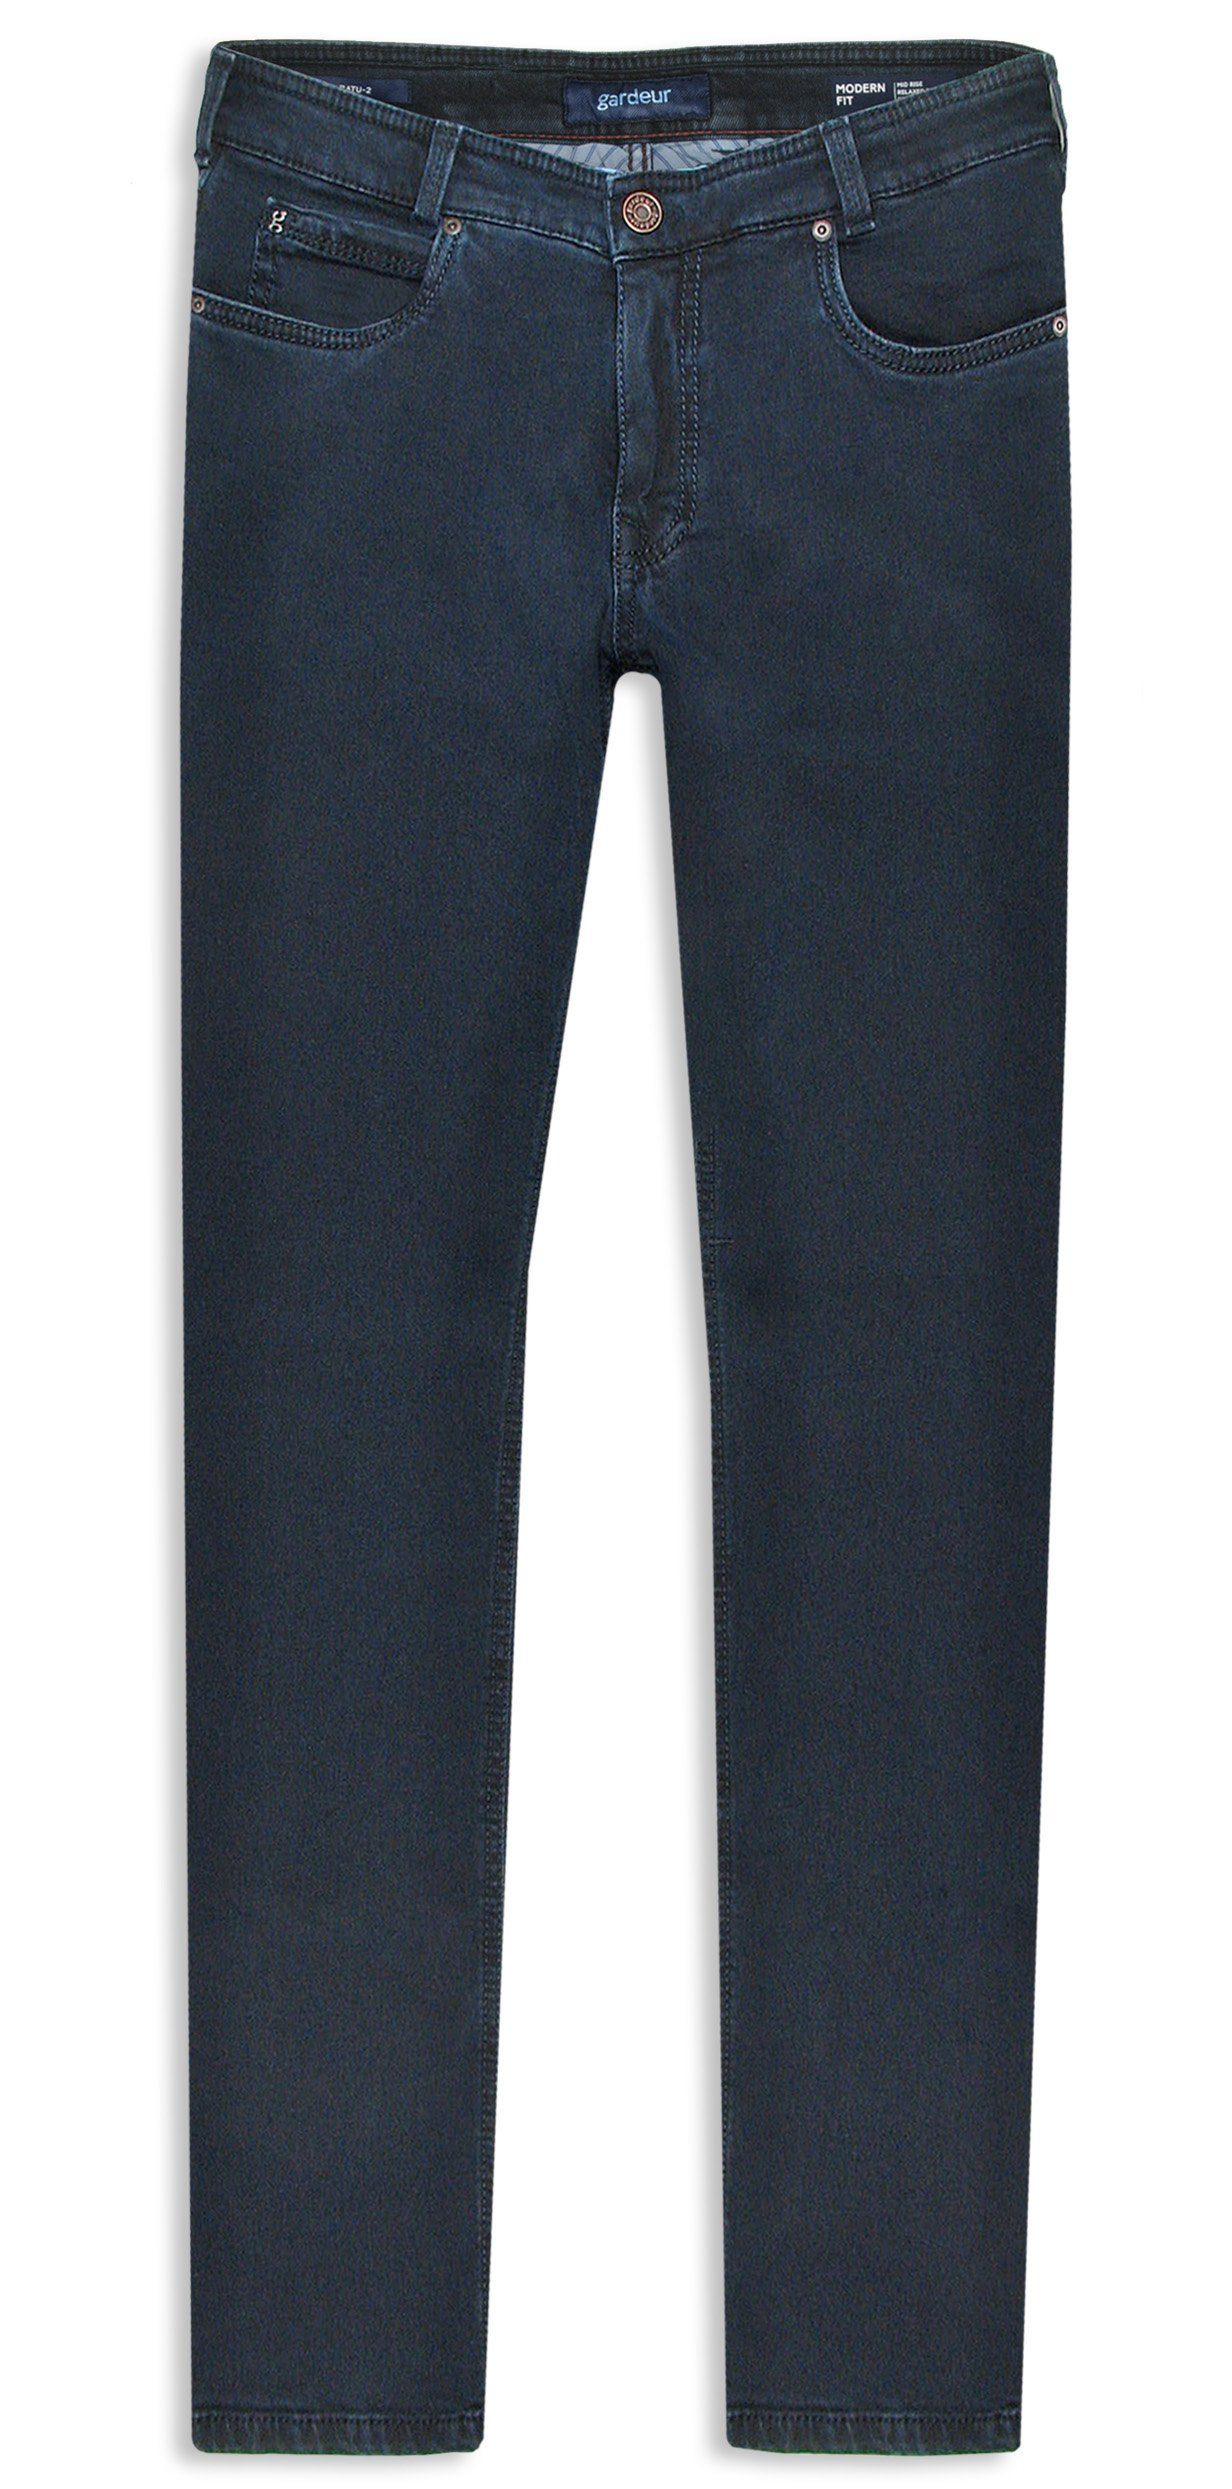 Atelier GARDEUR 5-Pocket-Jeans Batu-2 Superflex Denim 769 clean dark blue